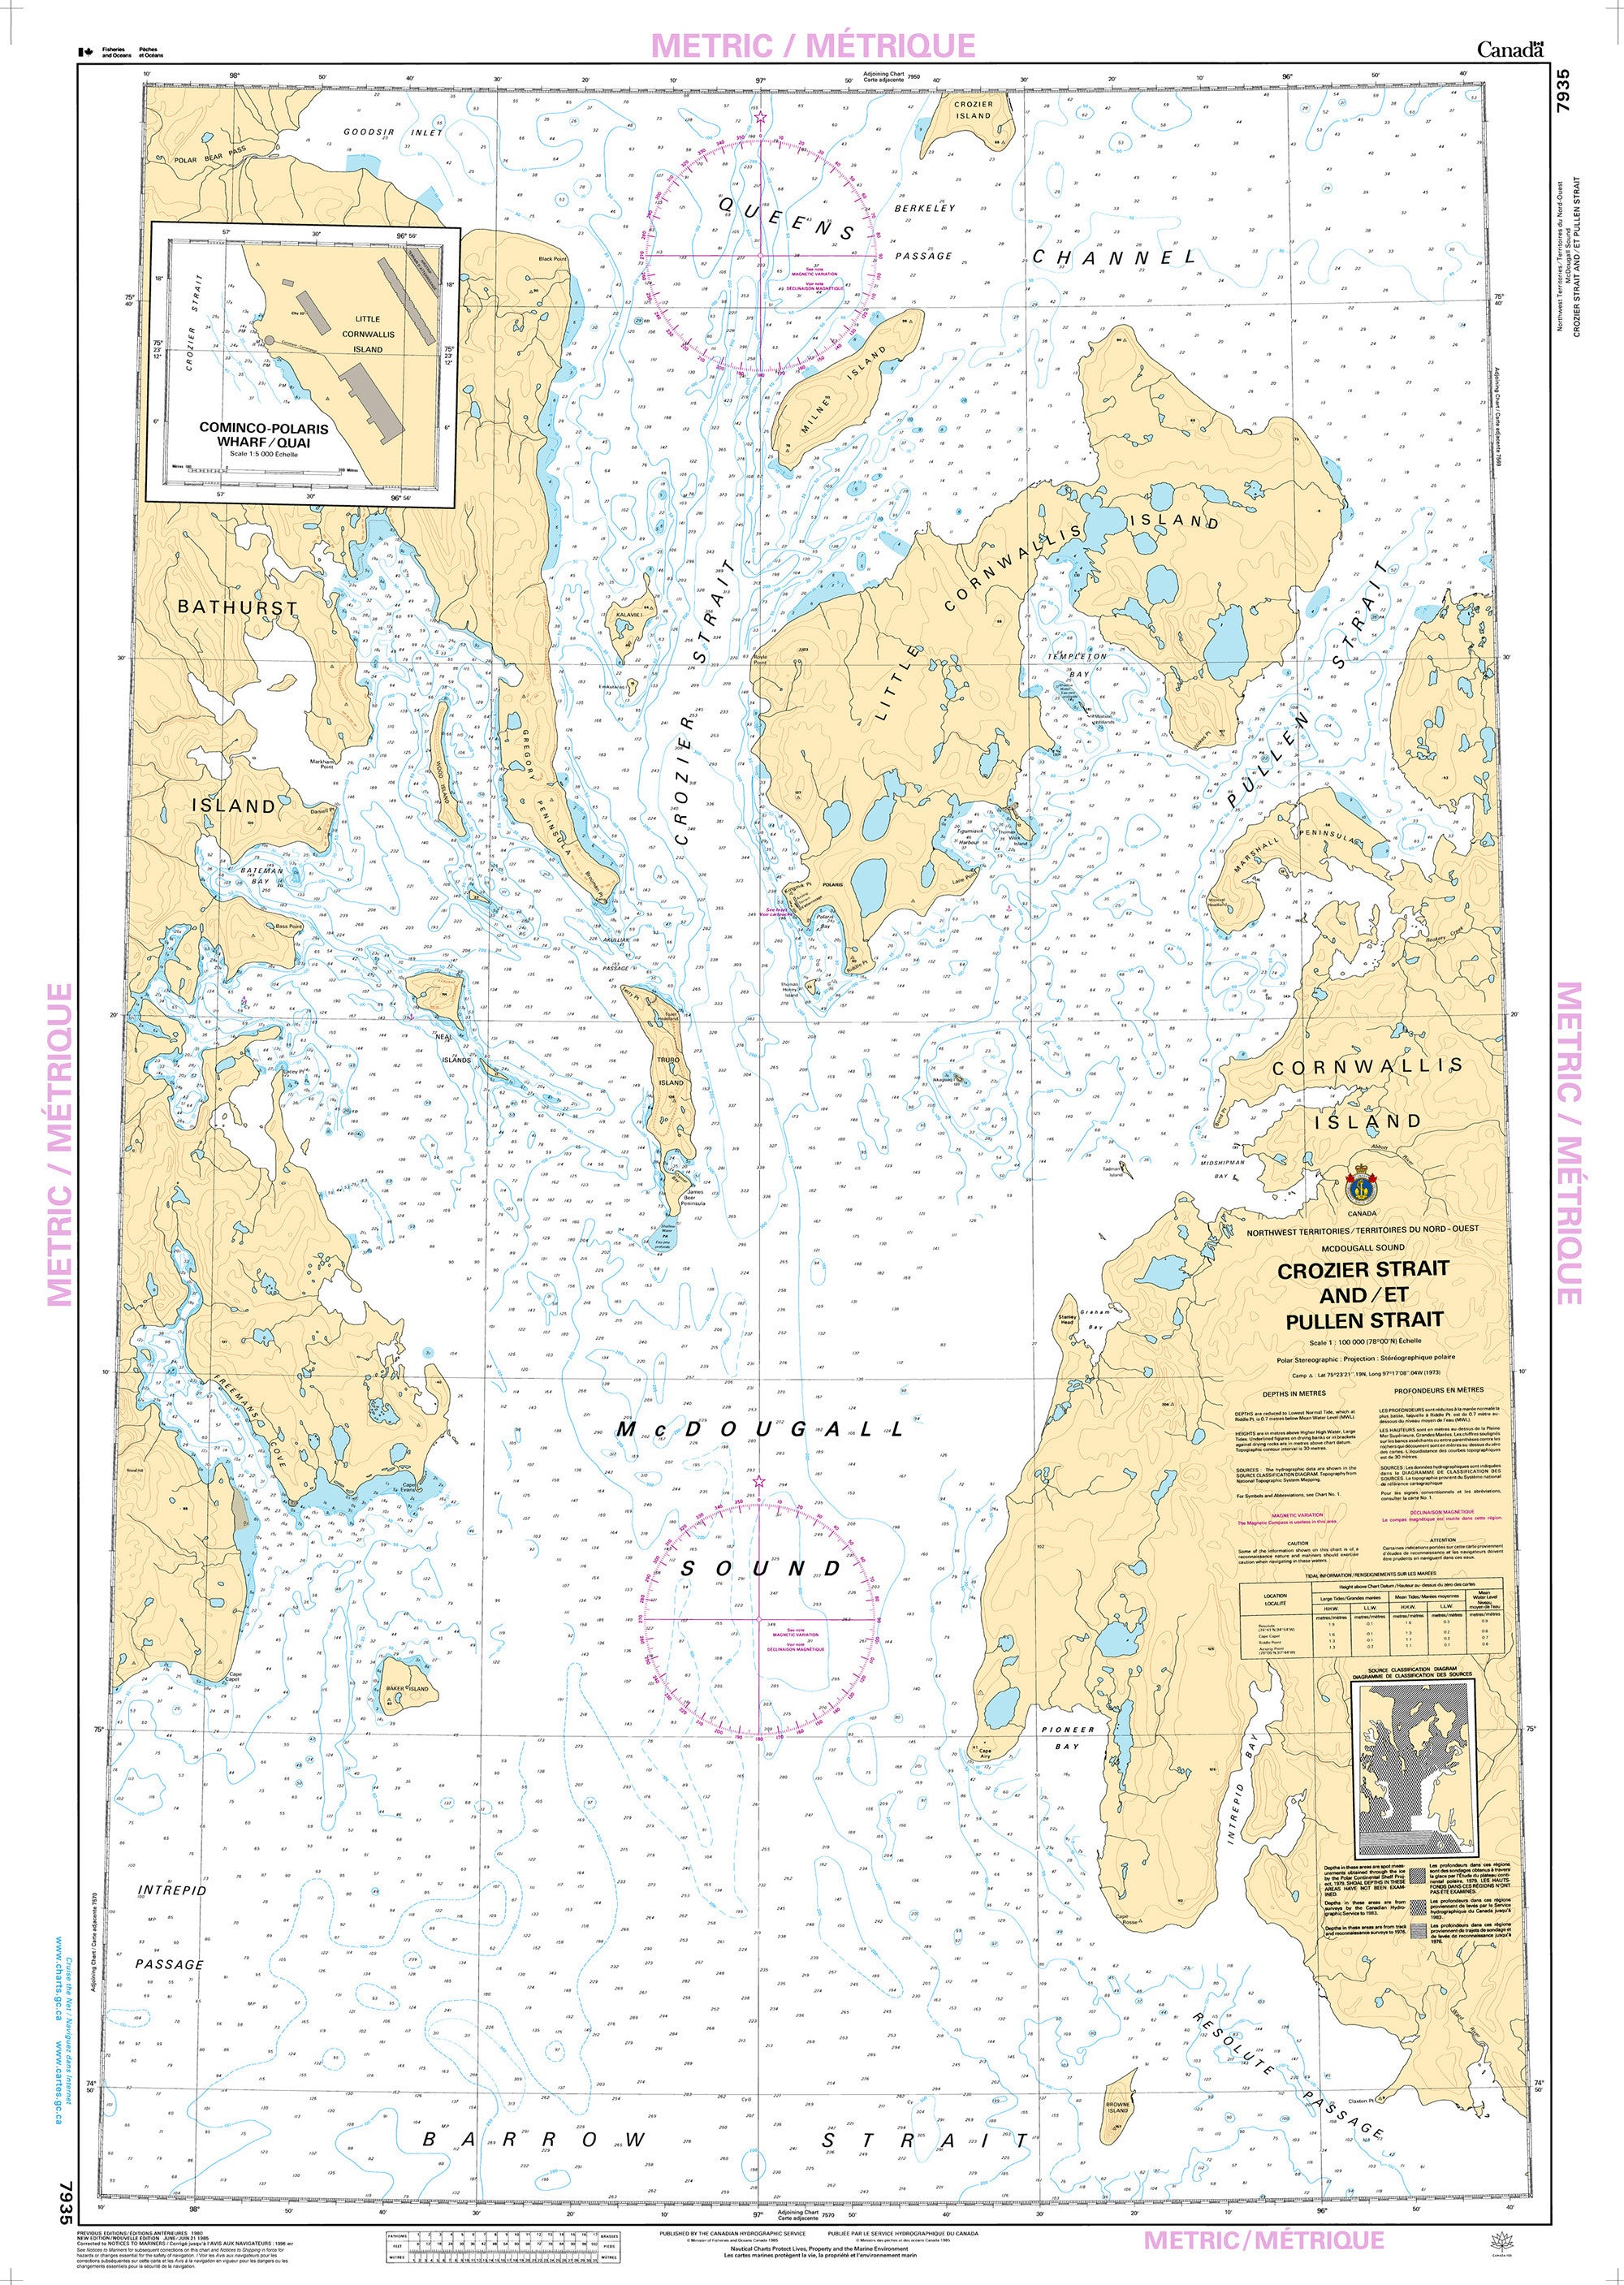 Canadian Hydrographic Service Nautical Chart CHS7935: Crozier Strait and/et Pullen Strait